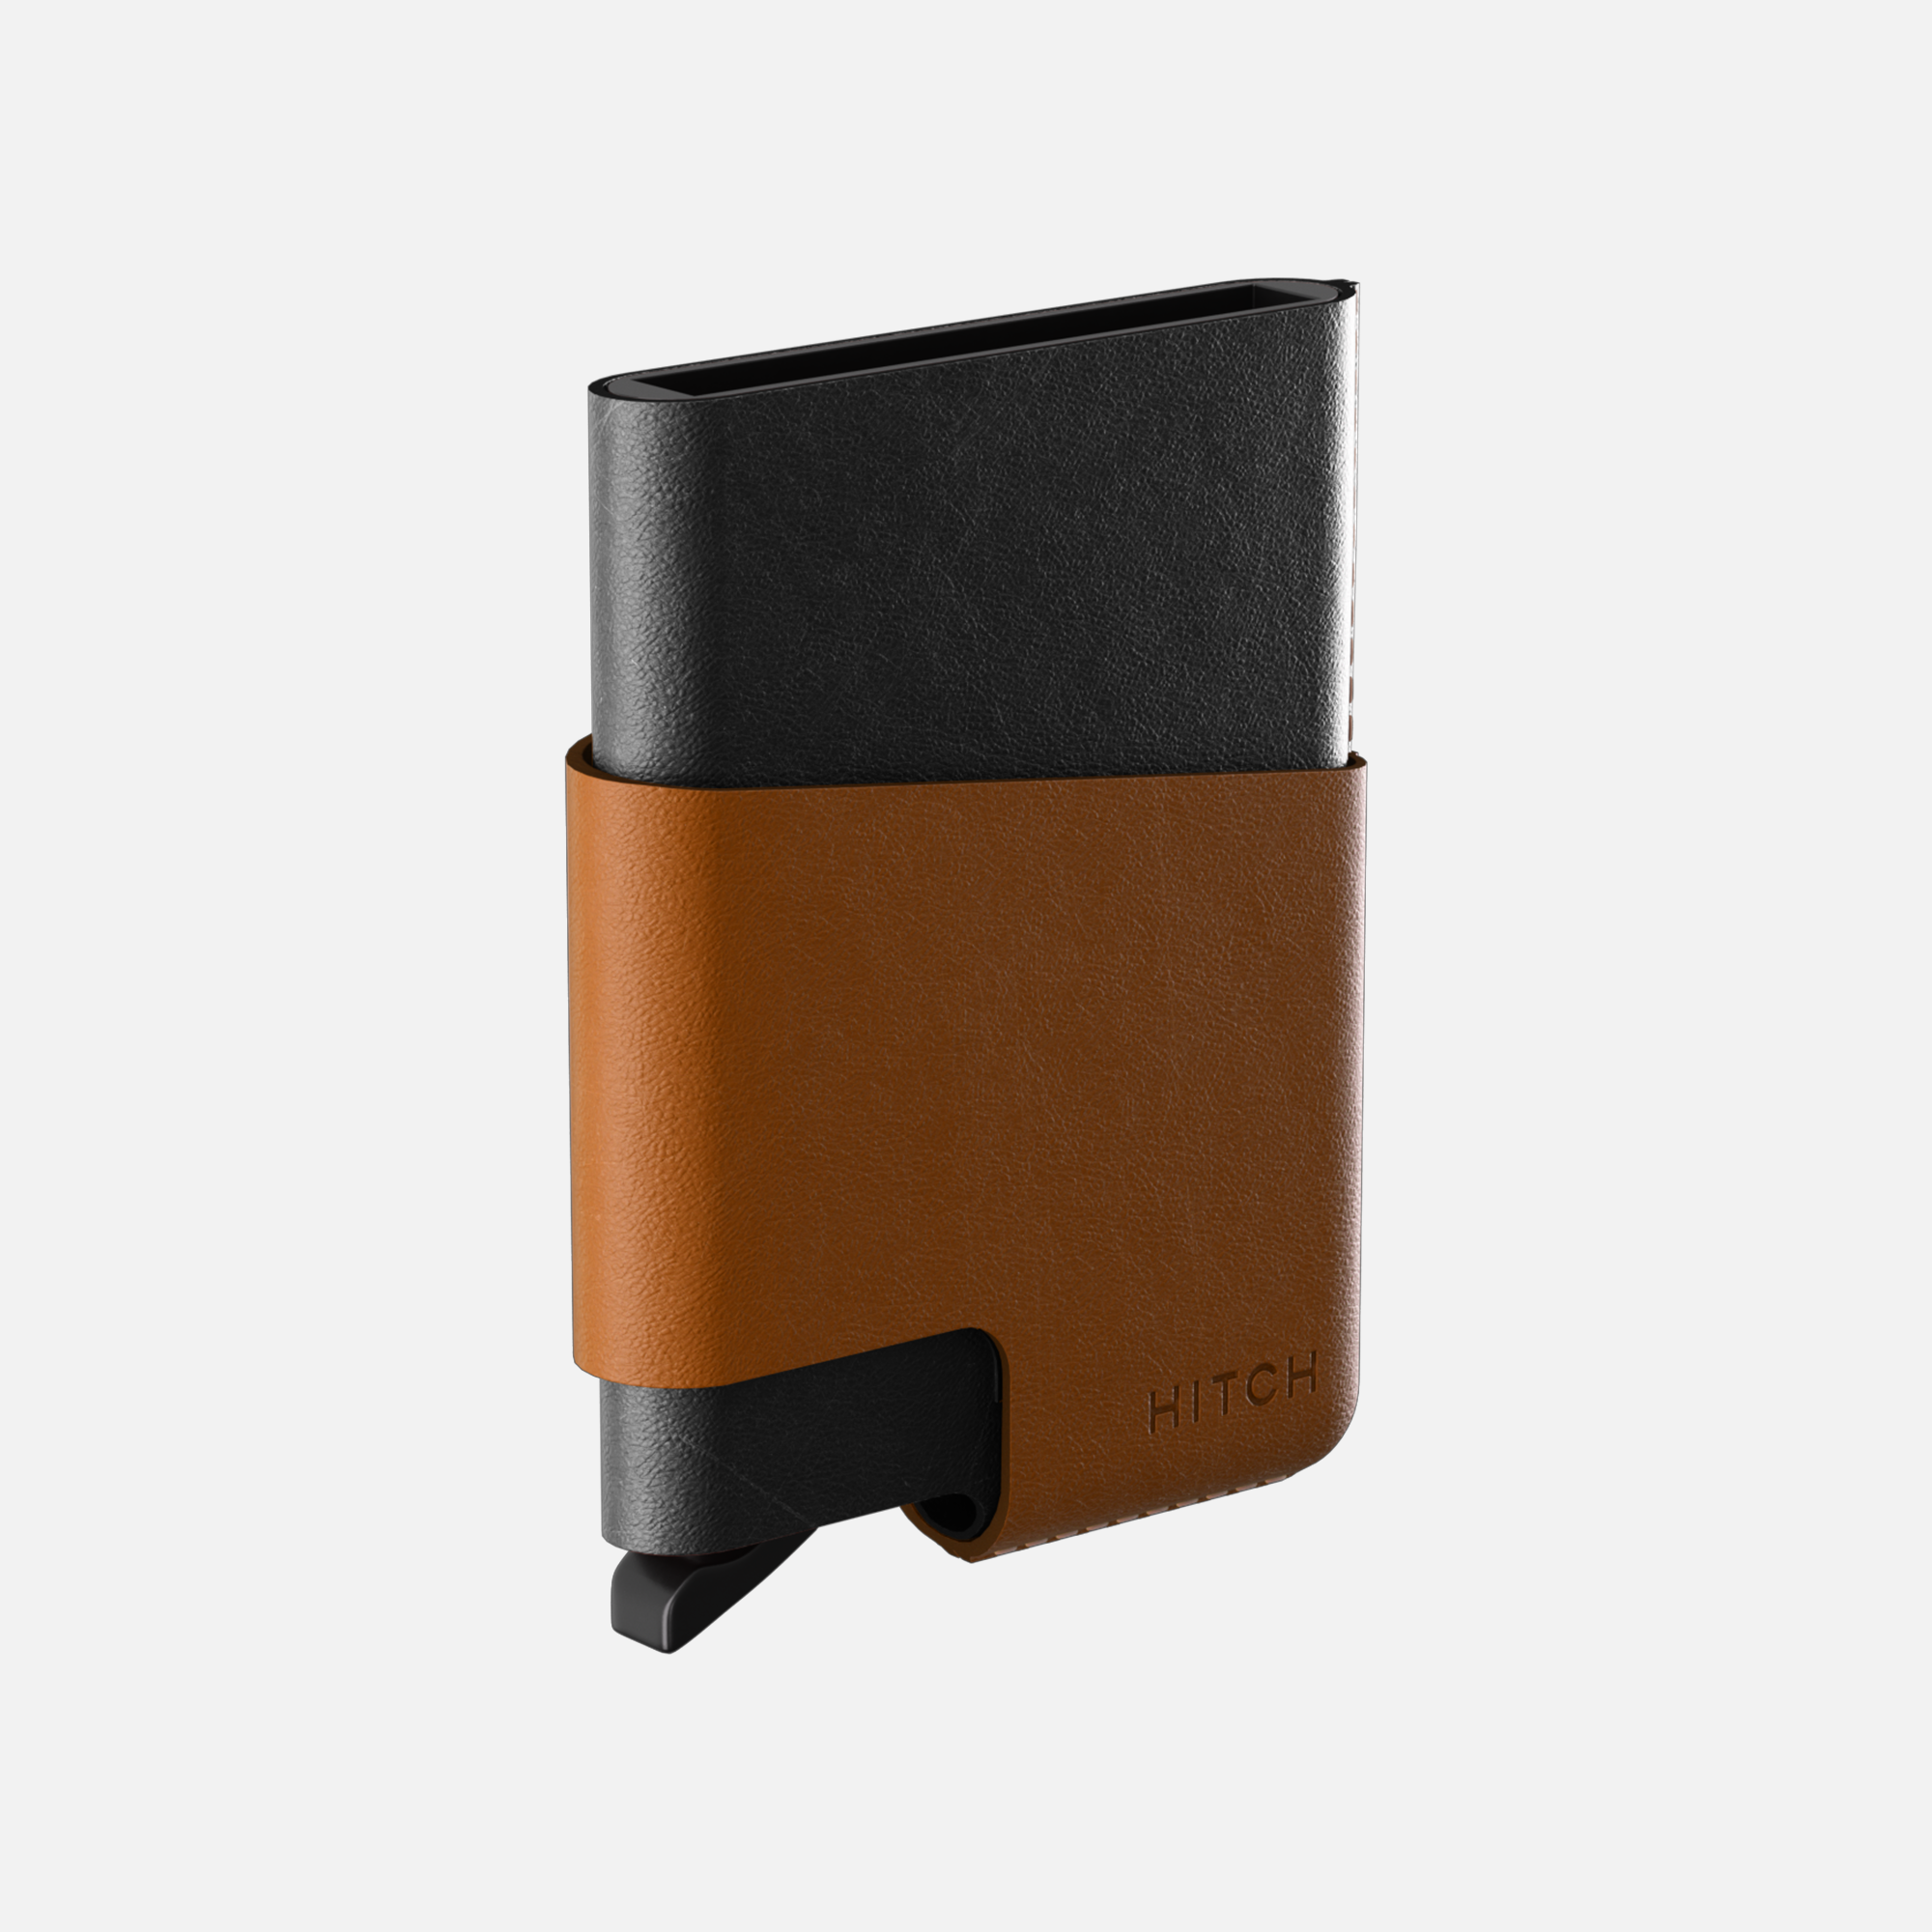 CUT-OUT Cardholder - RFID Block Featured - Handmade Natural Genuine Leather - Black/Havan